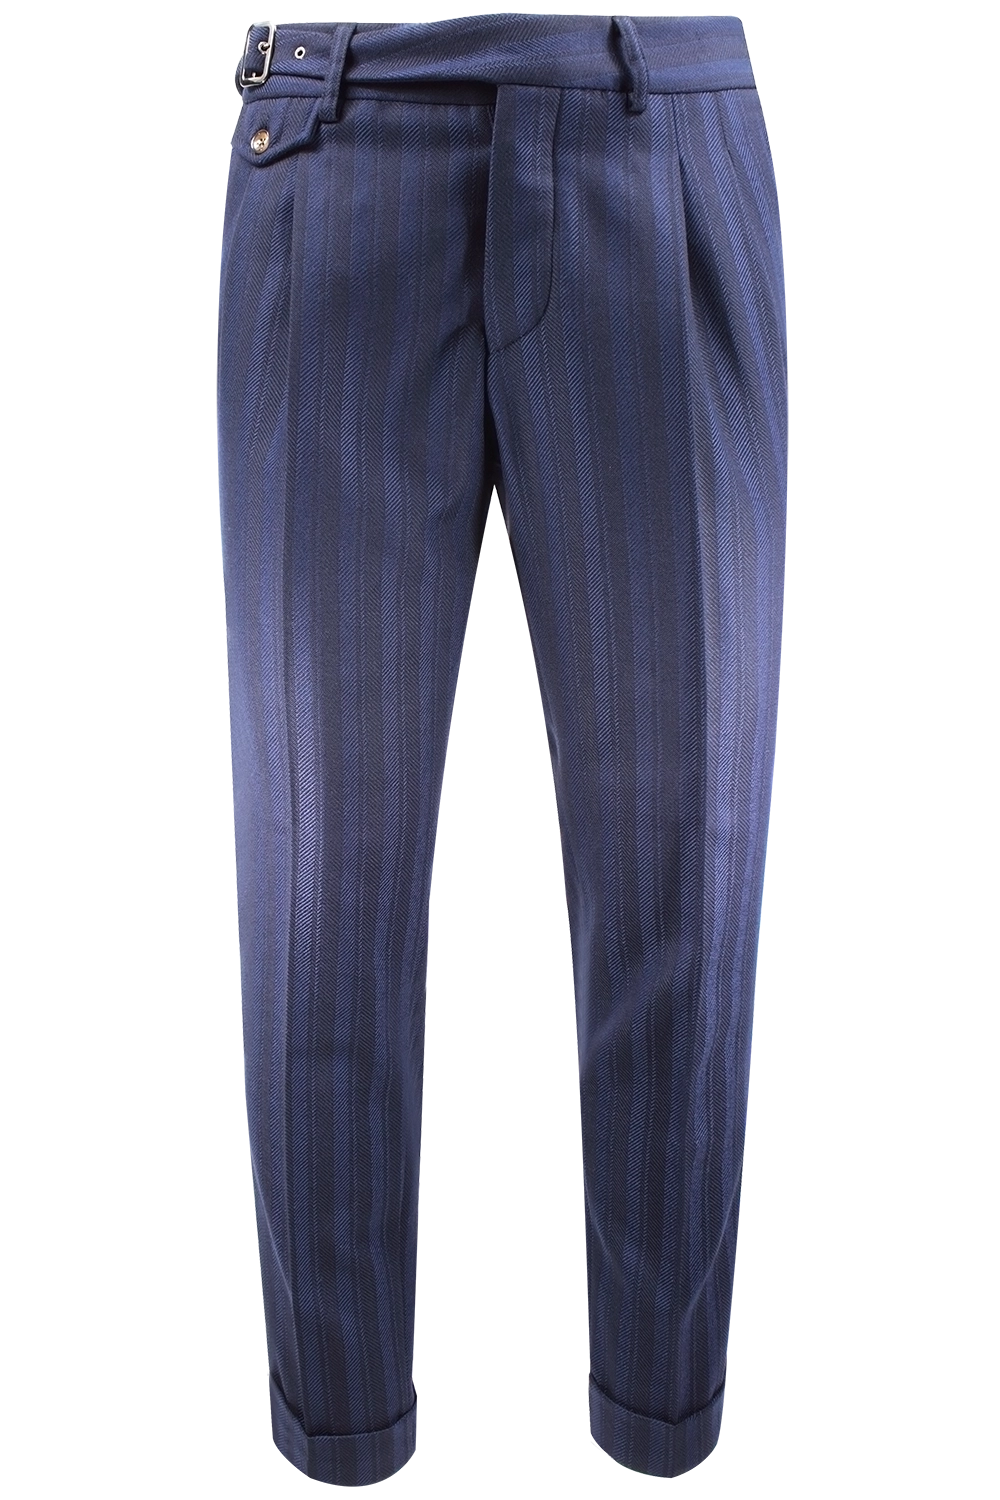 Pantalone con due pinces in lana a righe blu